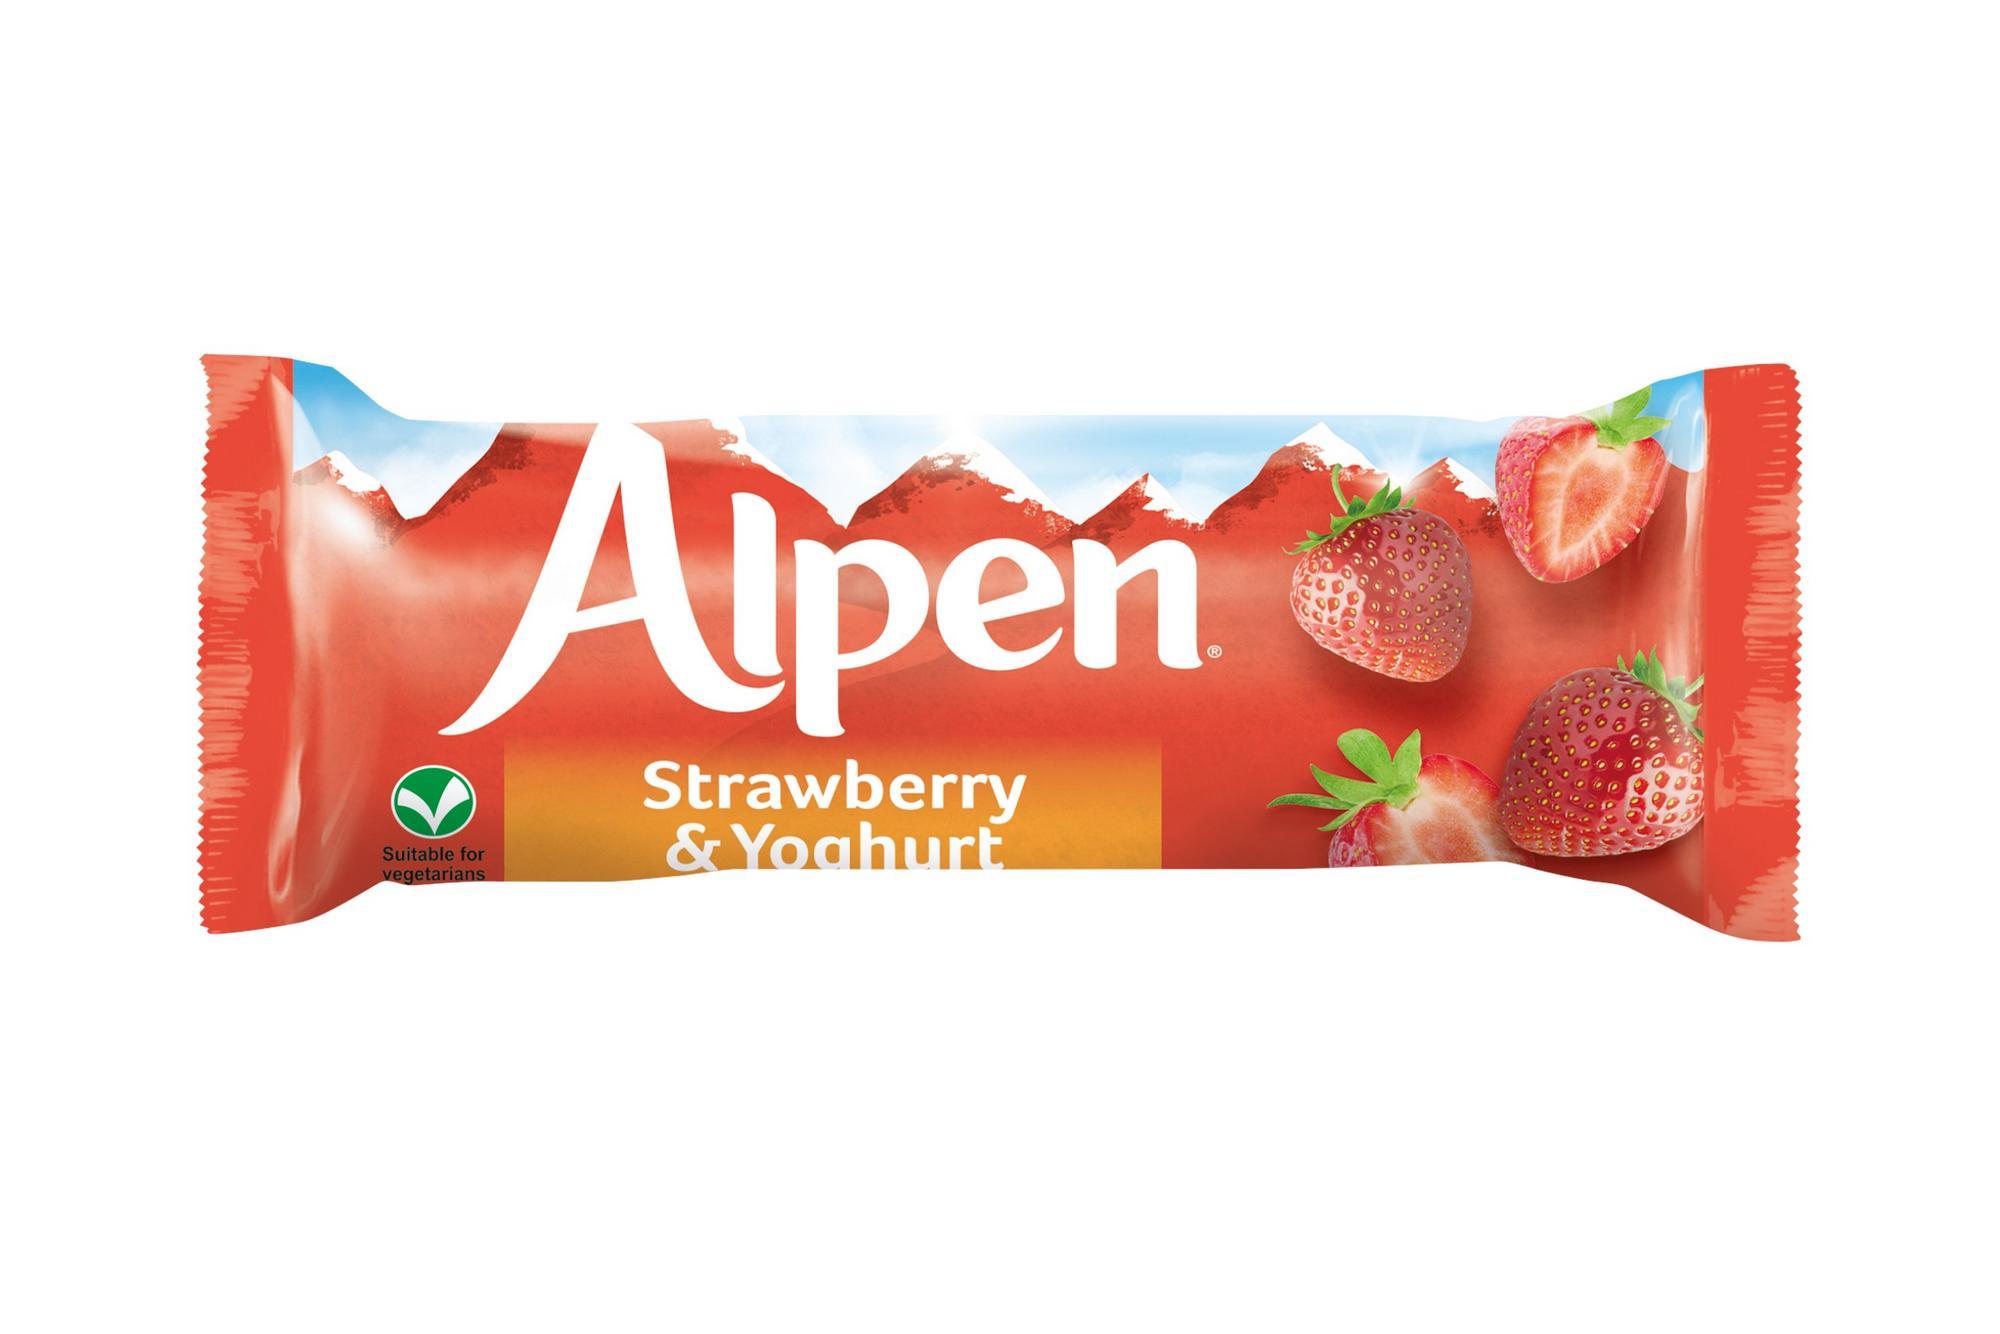 Alpen Strawberry & Yoghurt Bar 29g (24 Pack) Individual Bars - Vending Superstore